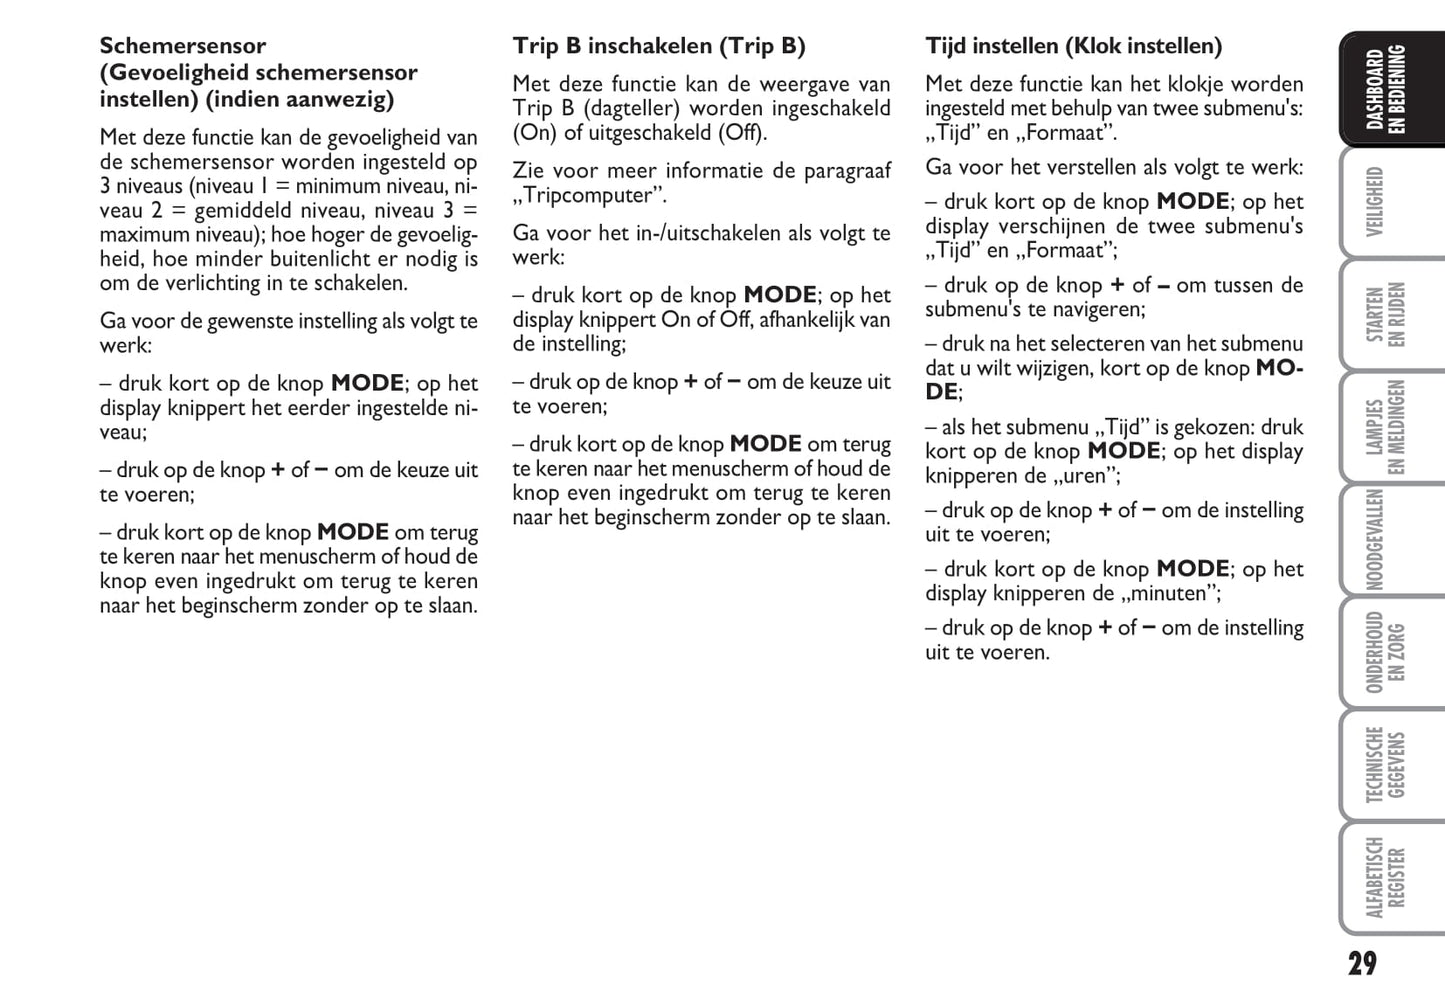 2009-2010 Fiat Croma Owner's Manual | Dutch